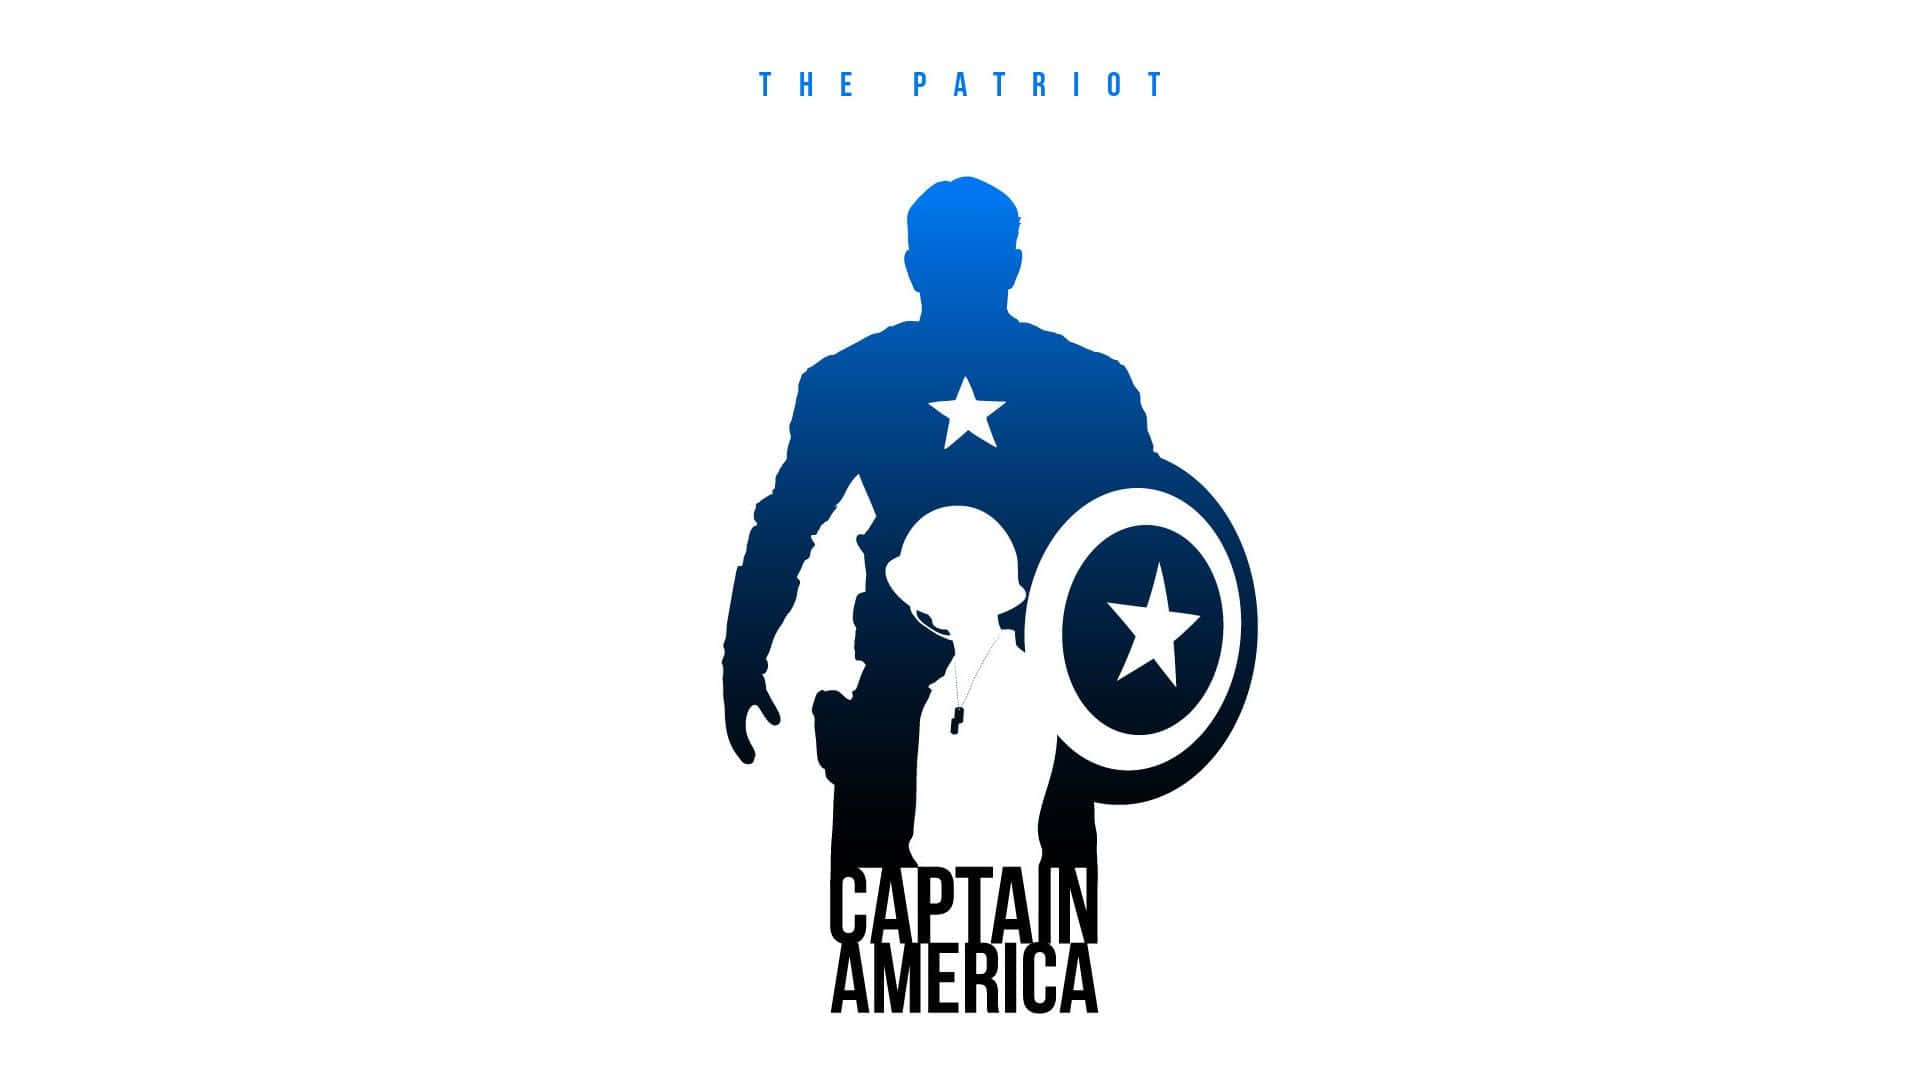 Join Steve Rogers on His Heroic Journey as Captain America